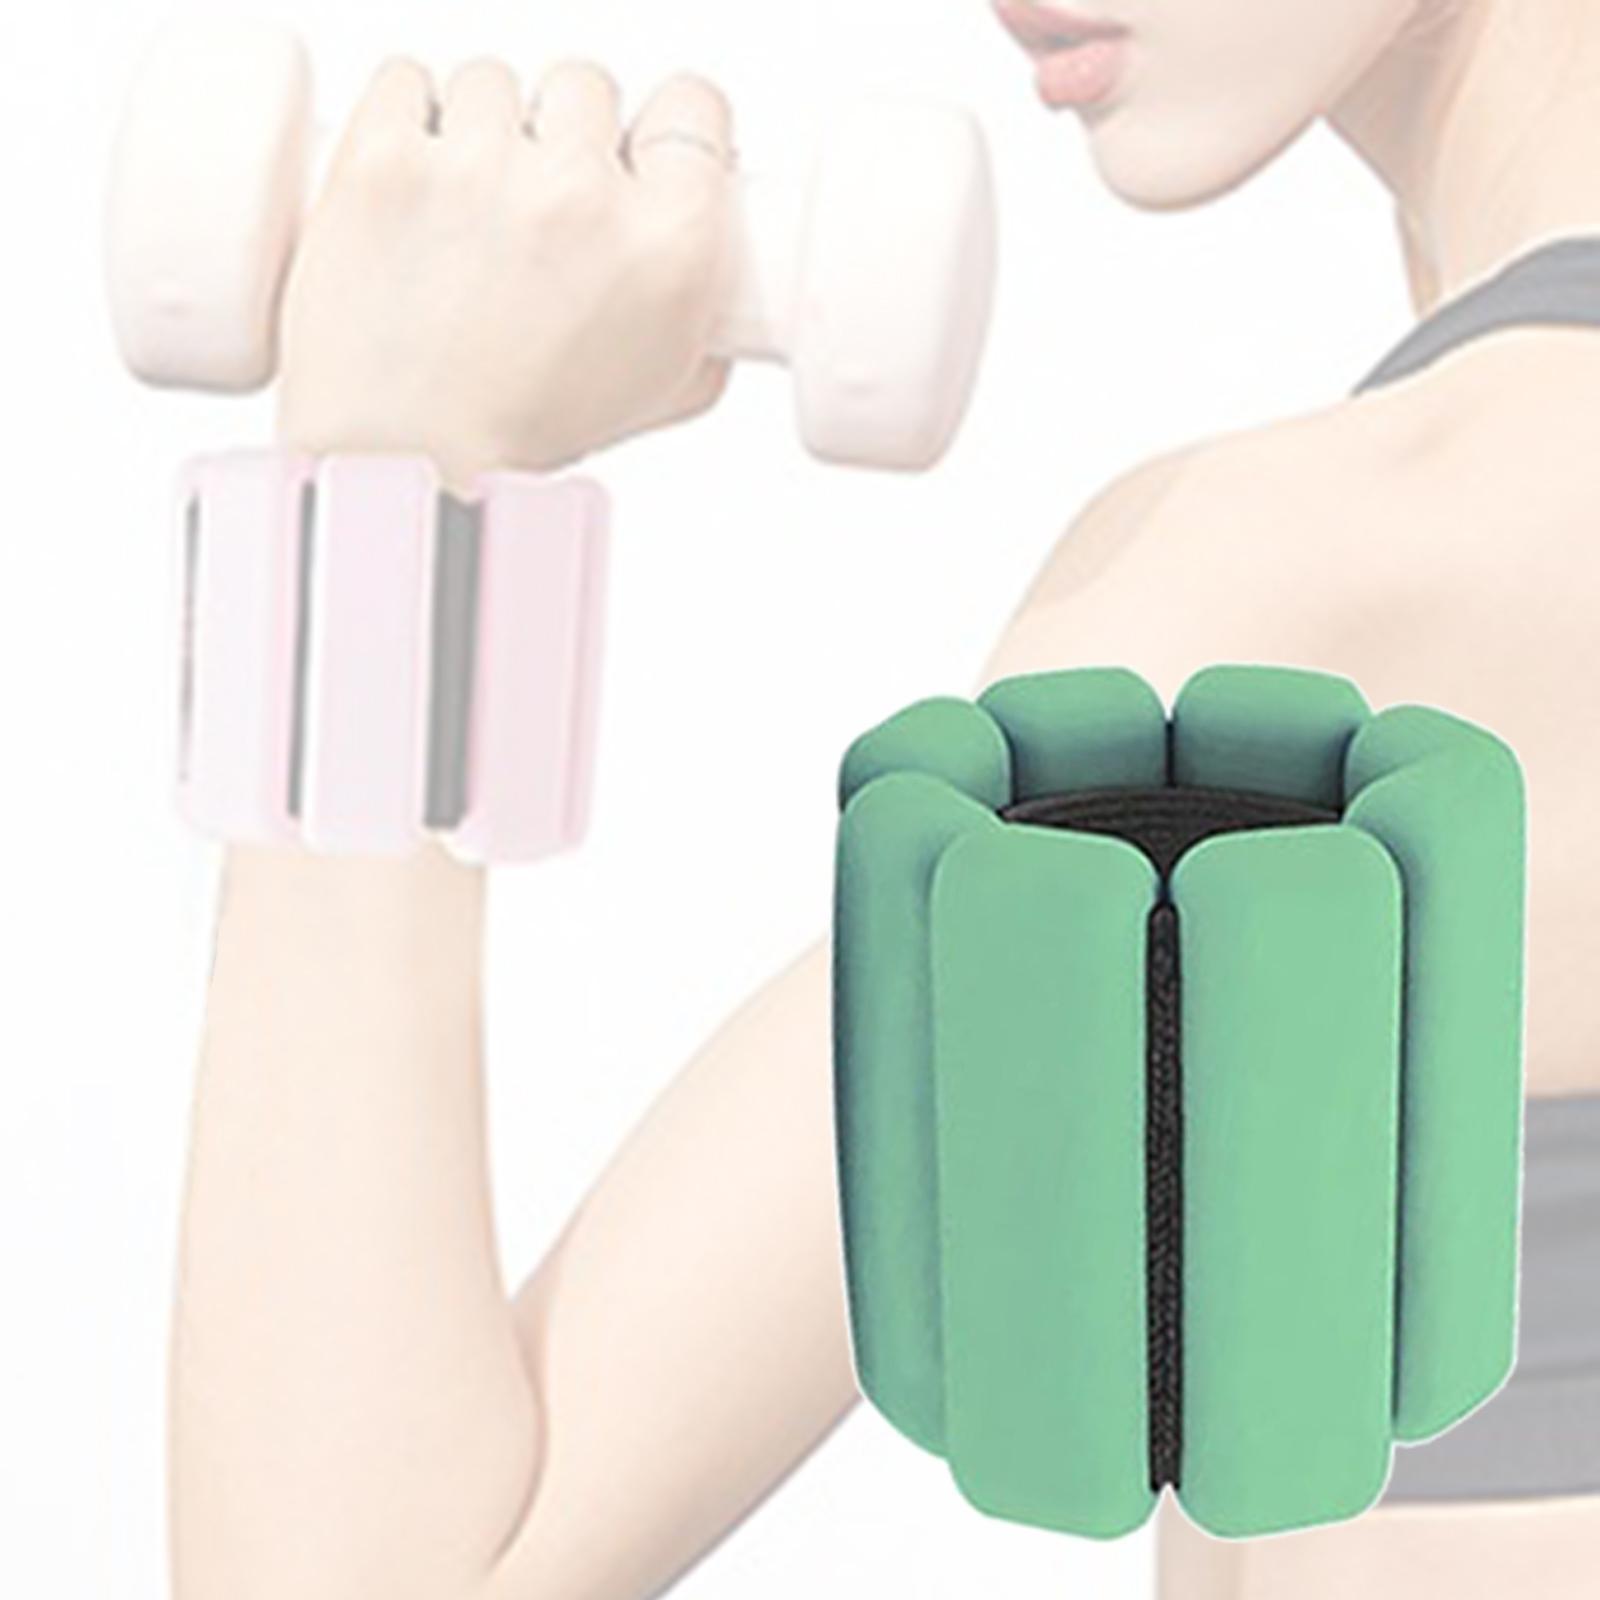 Wrist Weights Bracelet Gym Exercise Yoga Fitness Training Running Green 1pc